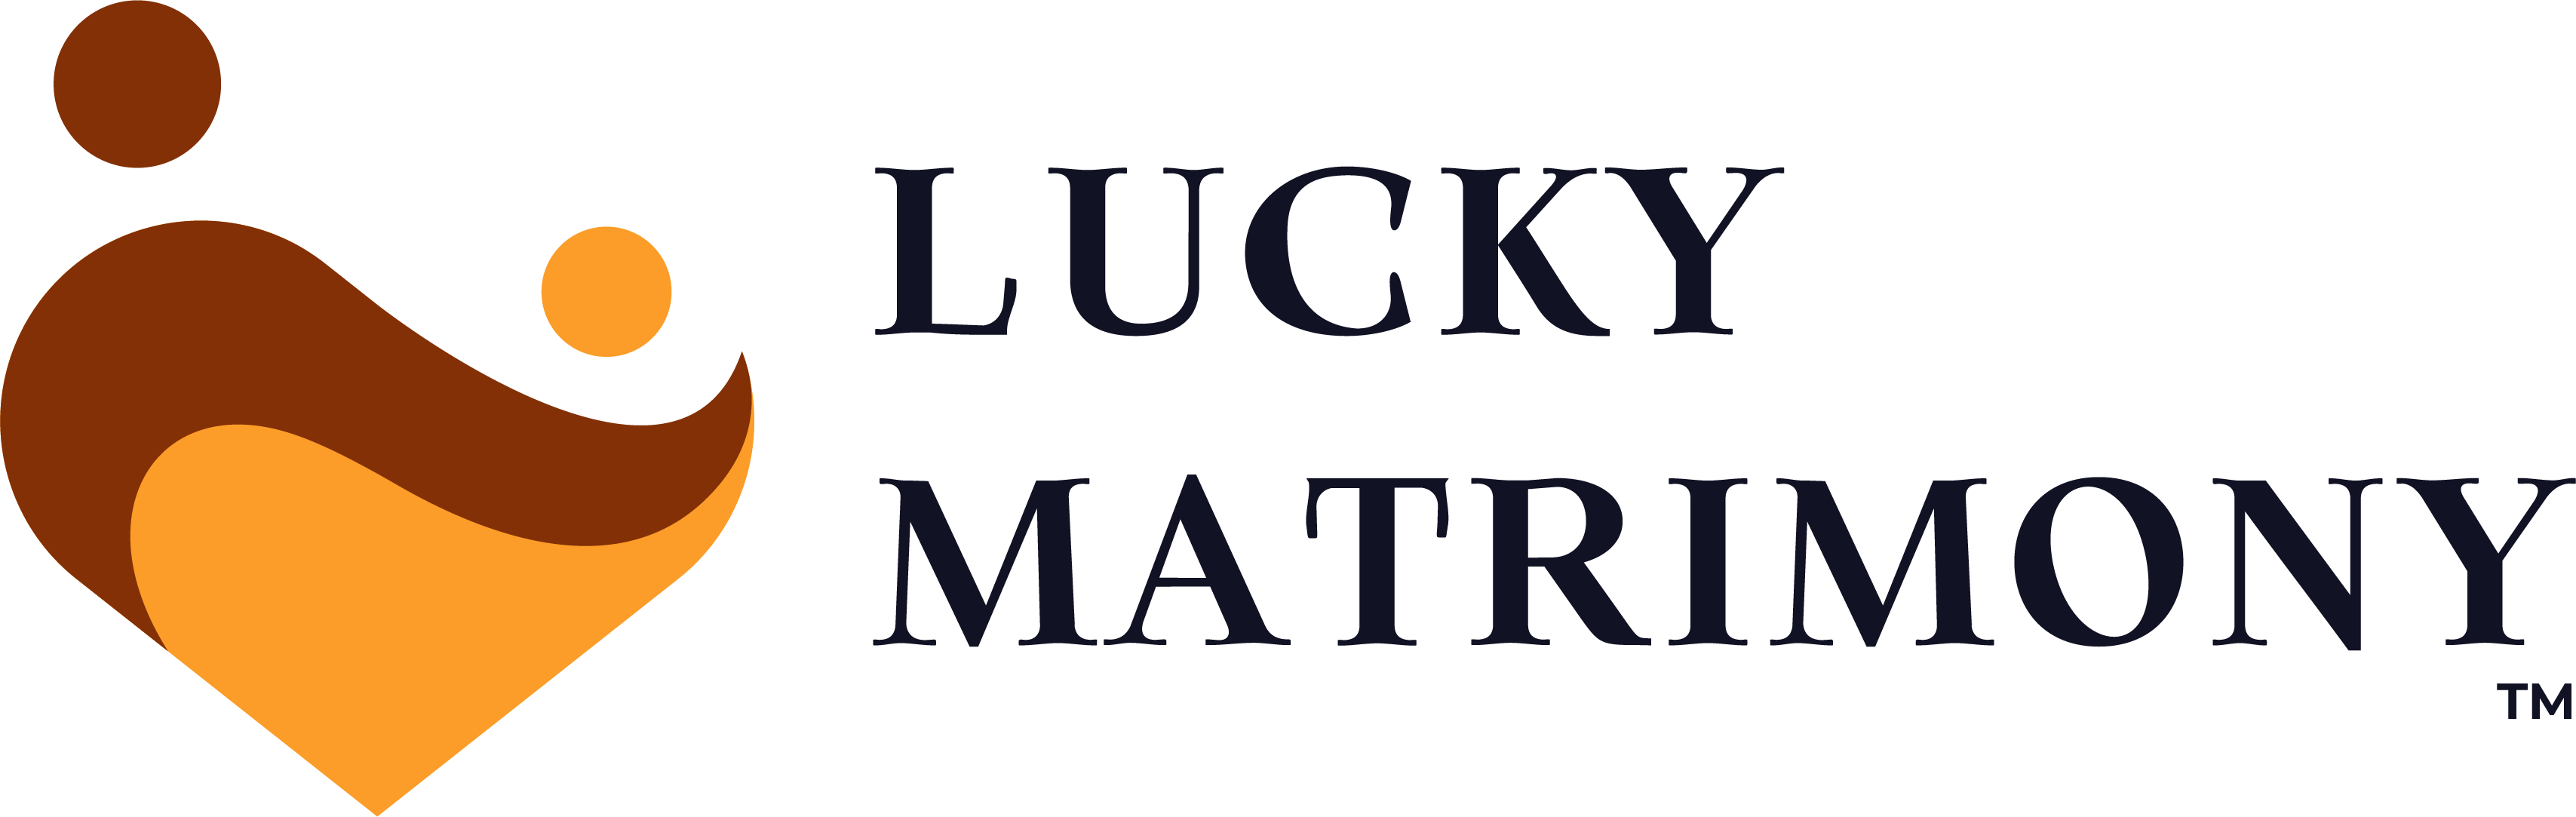 lucky-matrimony-logo